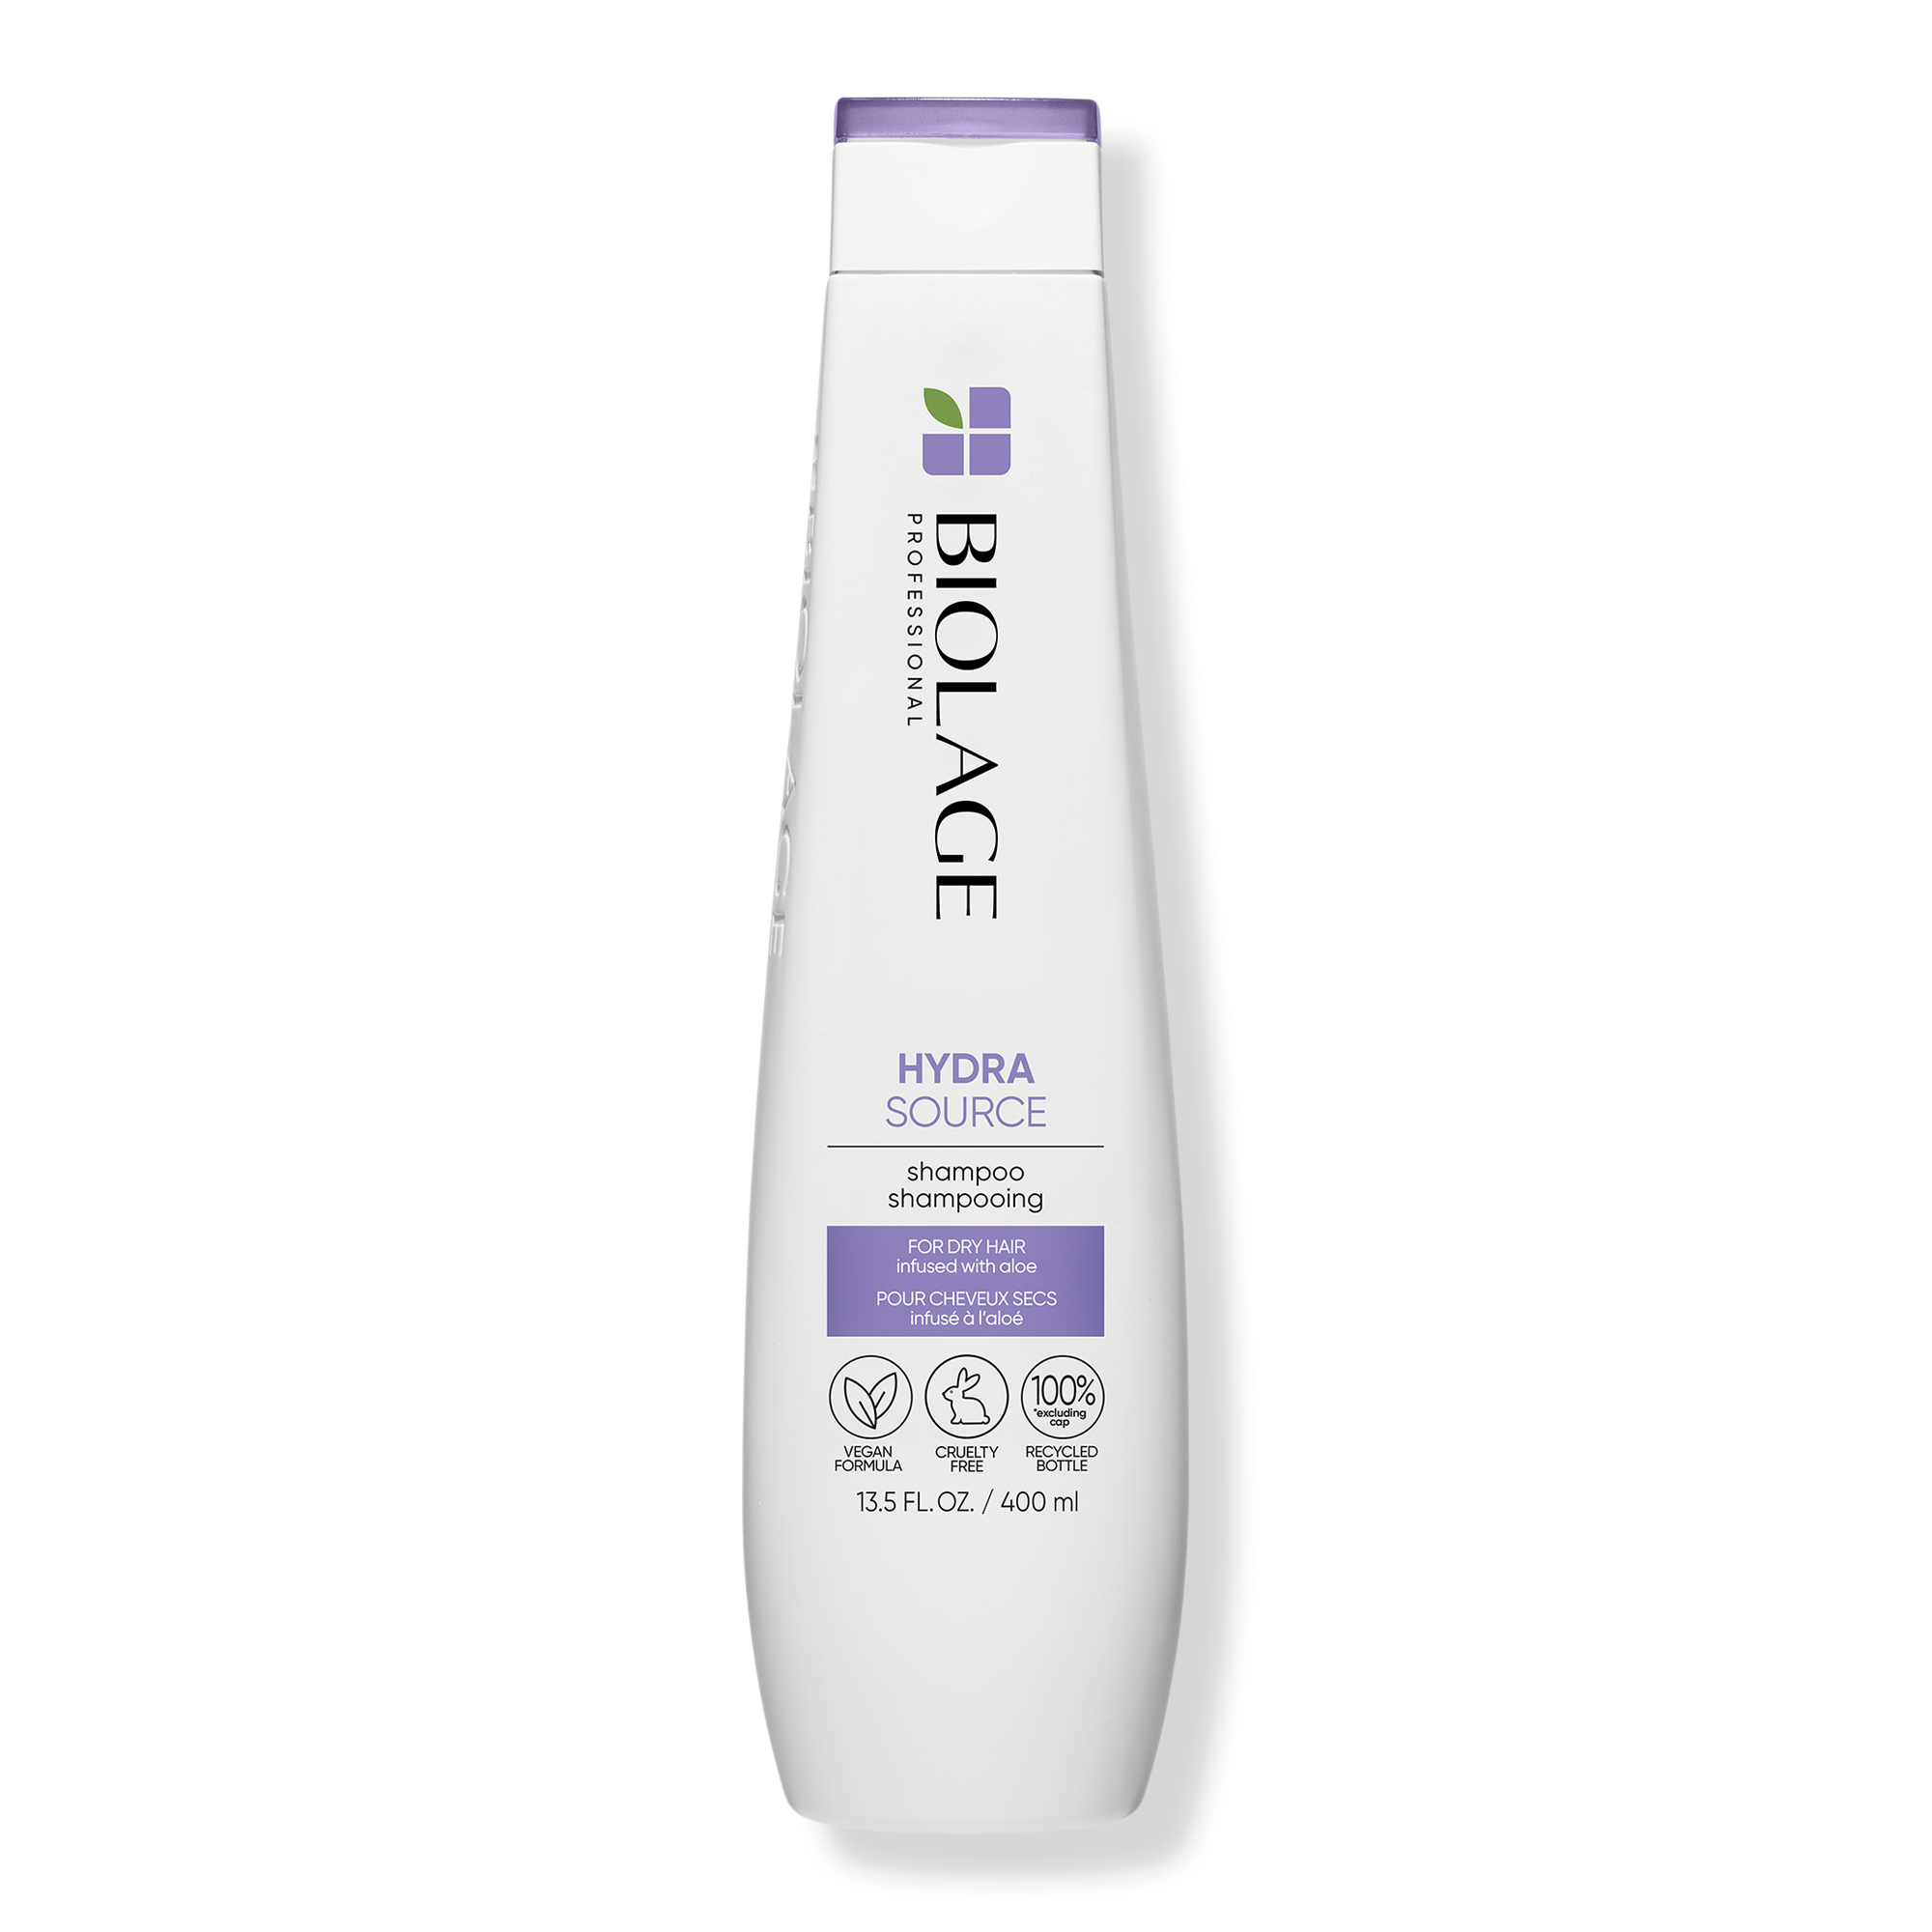 Matrix Biolage HydraSource Shampoo 13.5oz & Conditioner Balm 9.5oz Duo ($46 Value) / DUO